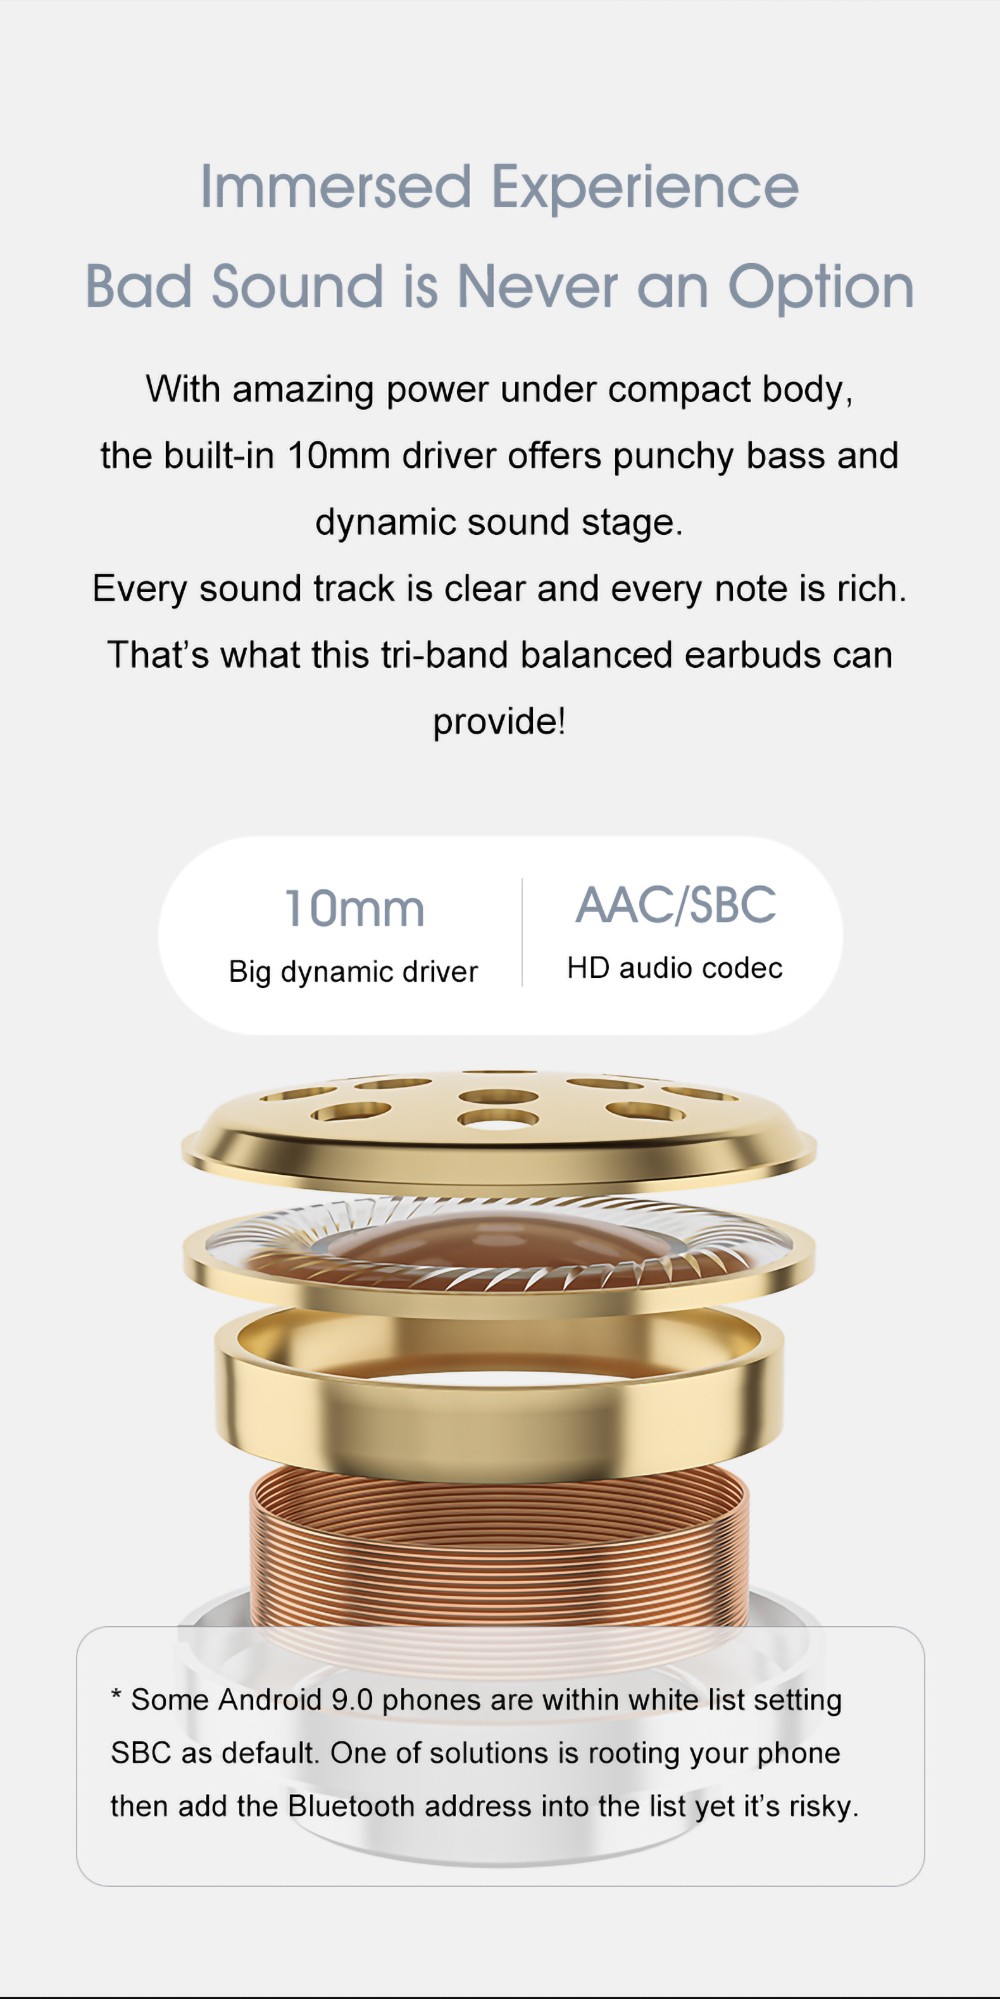 QCY HT03 Bluetooth 5.1 TWS Ενεργά ασύρματα ακουστικά ακύρωσης θορύβου